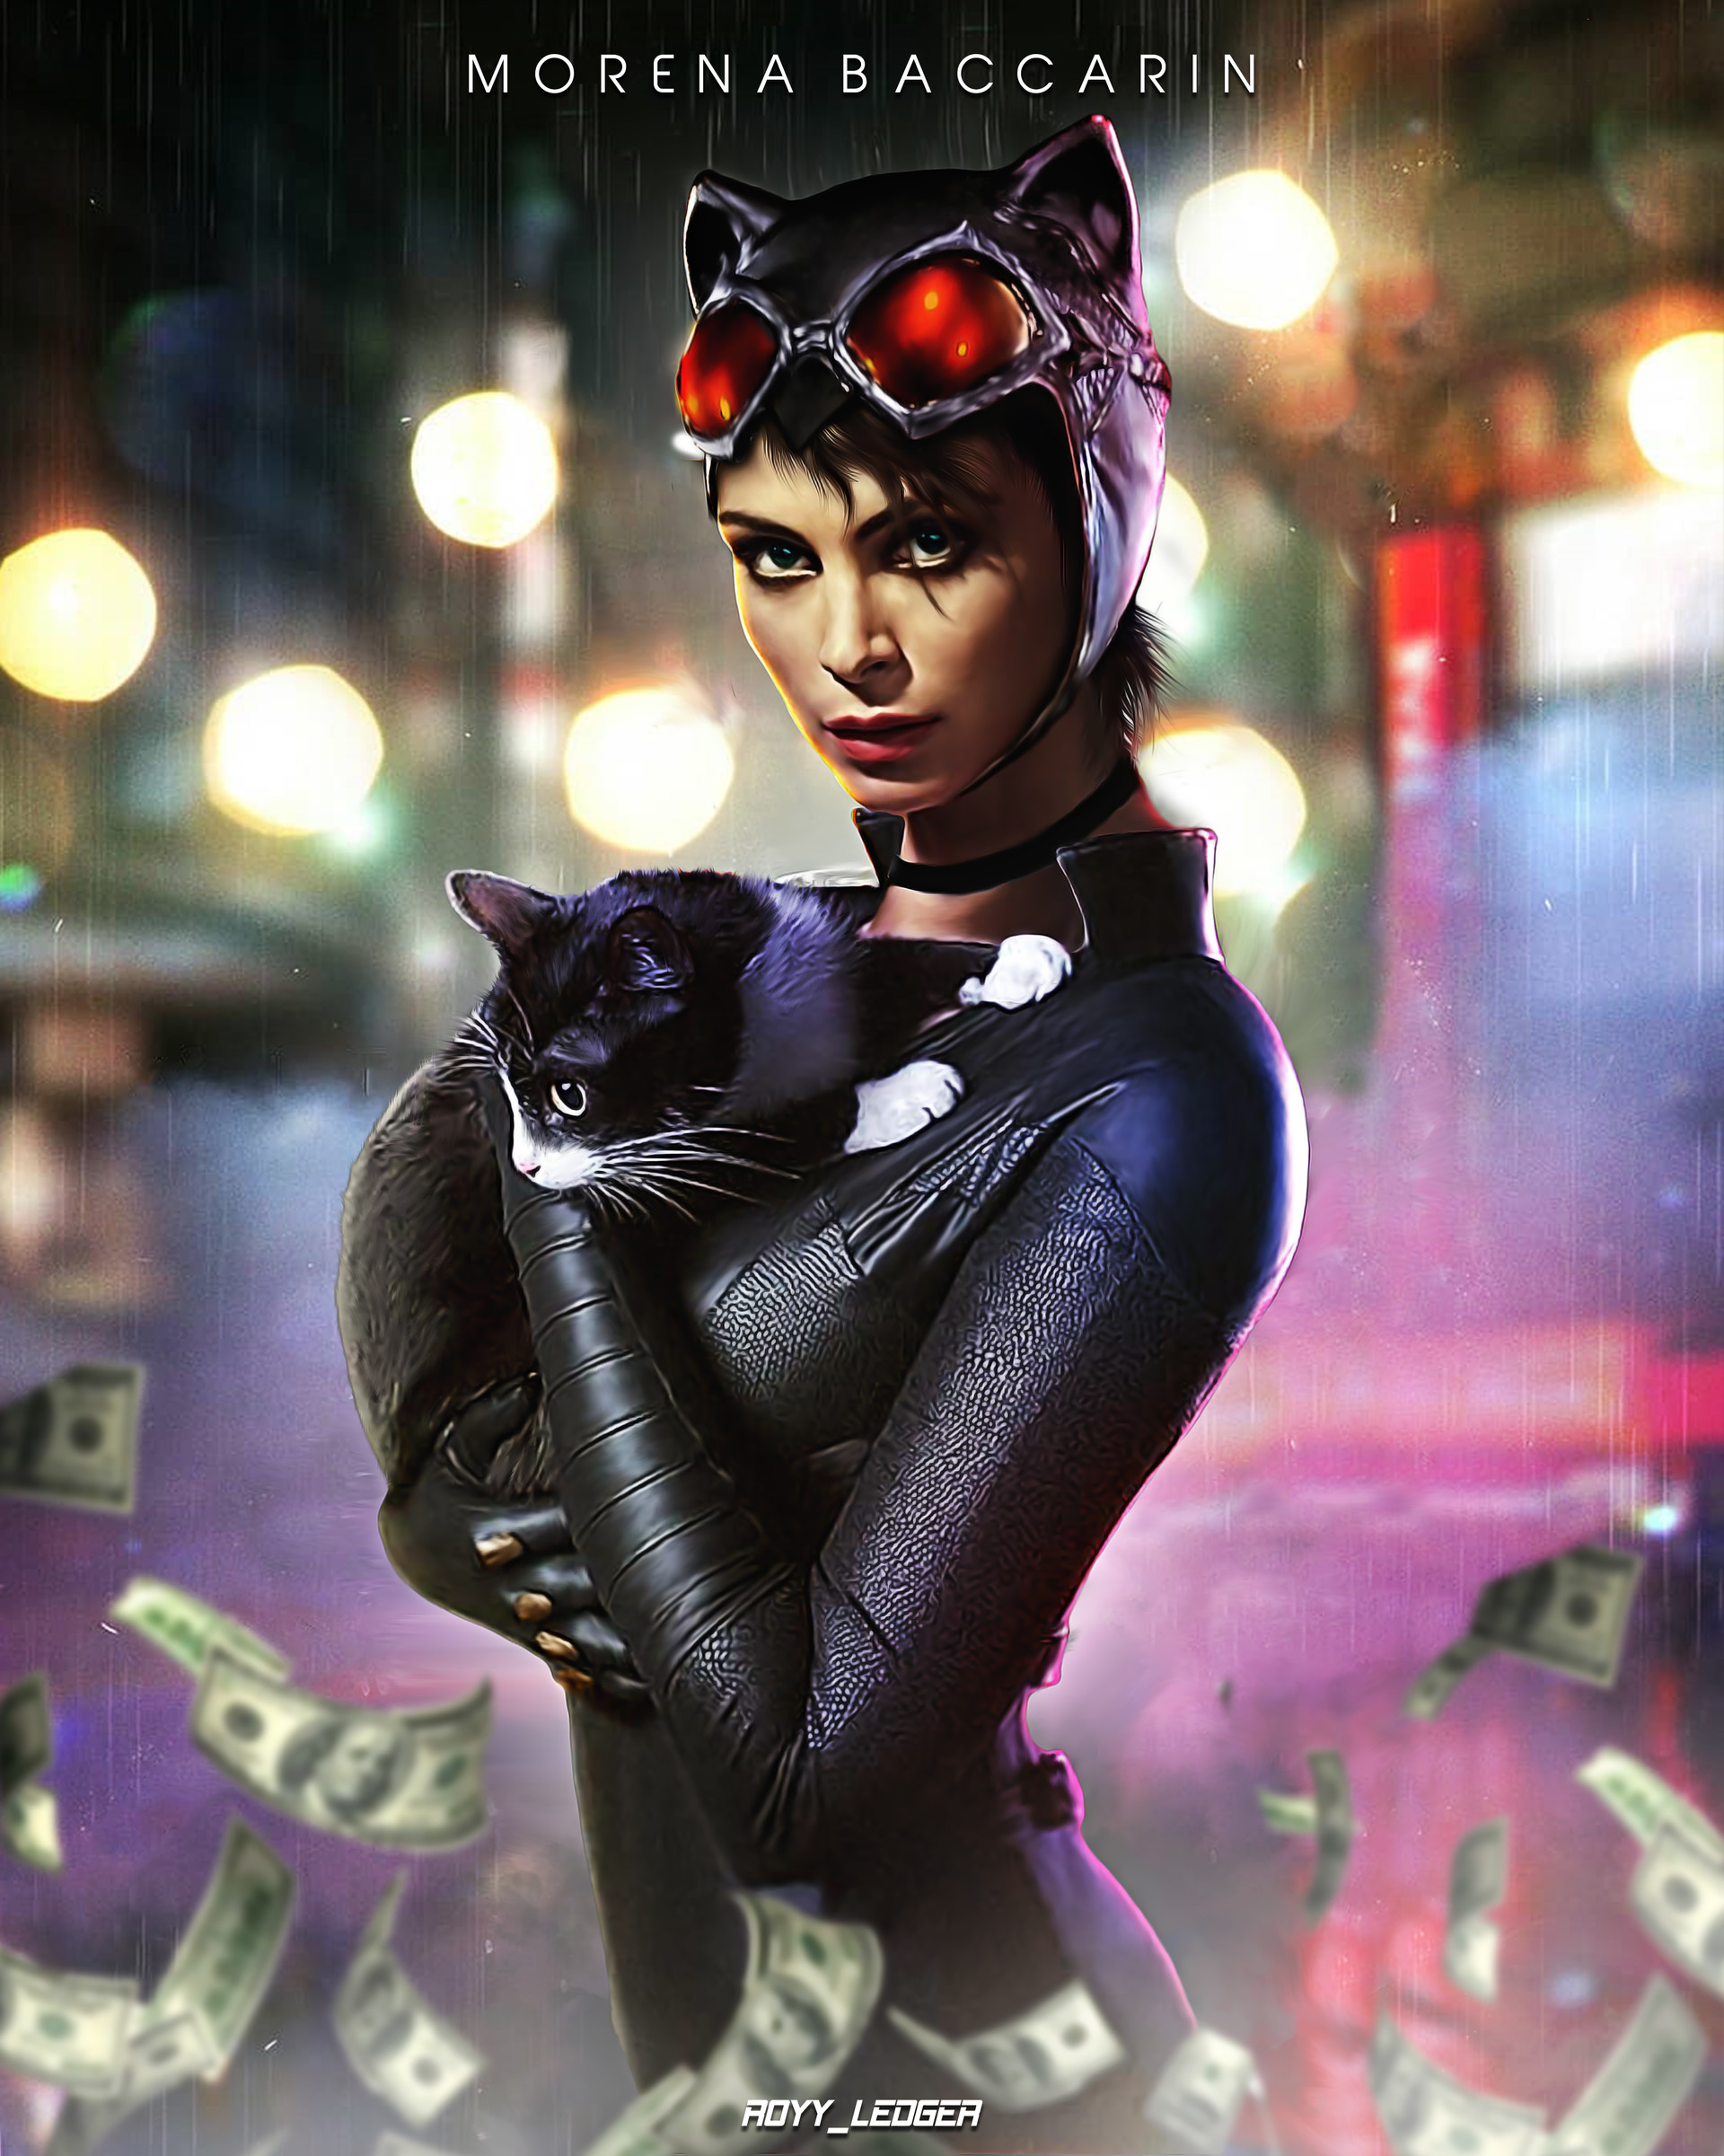 Royy Ledger - Morena Baccarin as Catwoman (Fan art) .